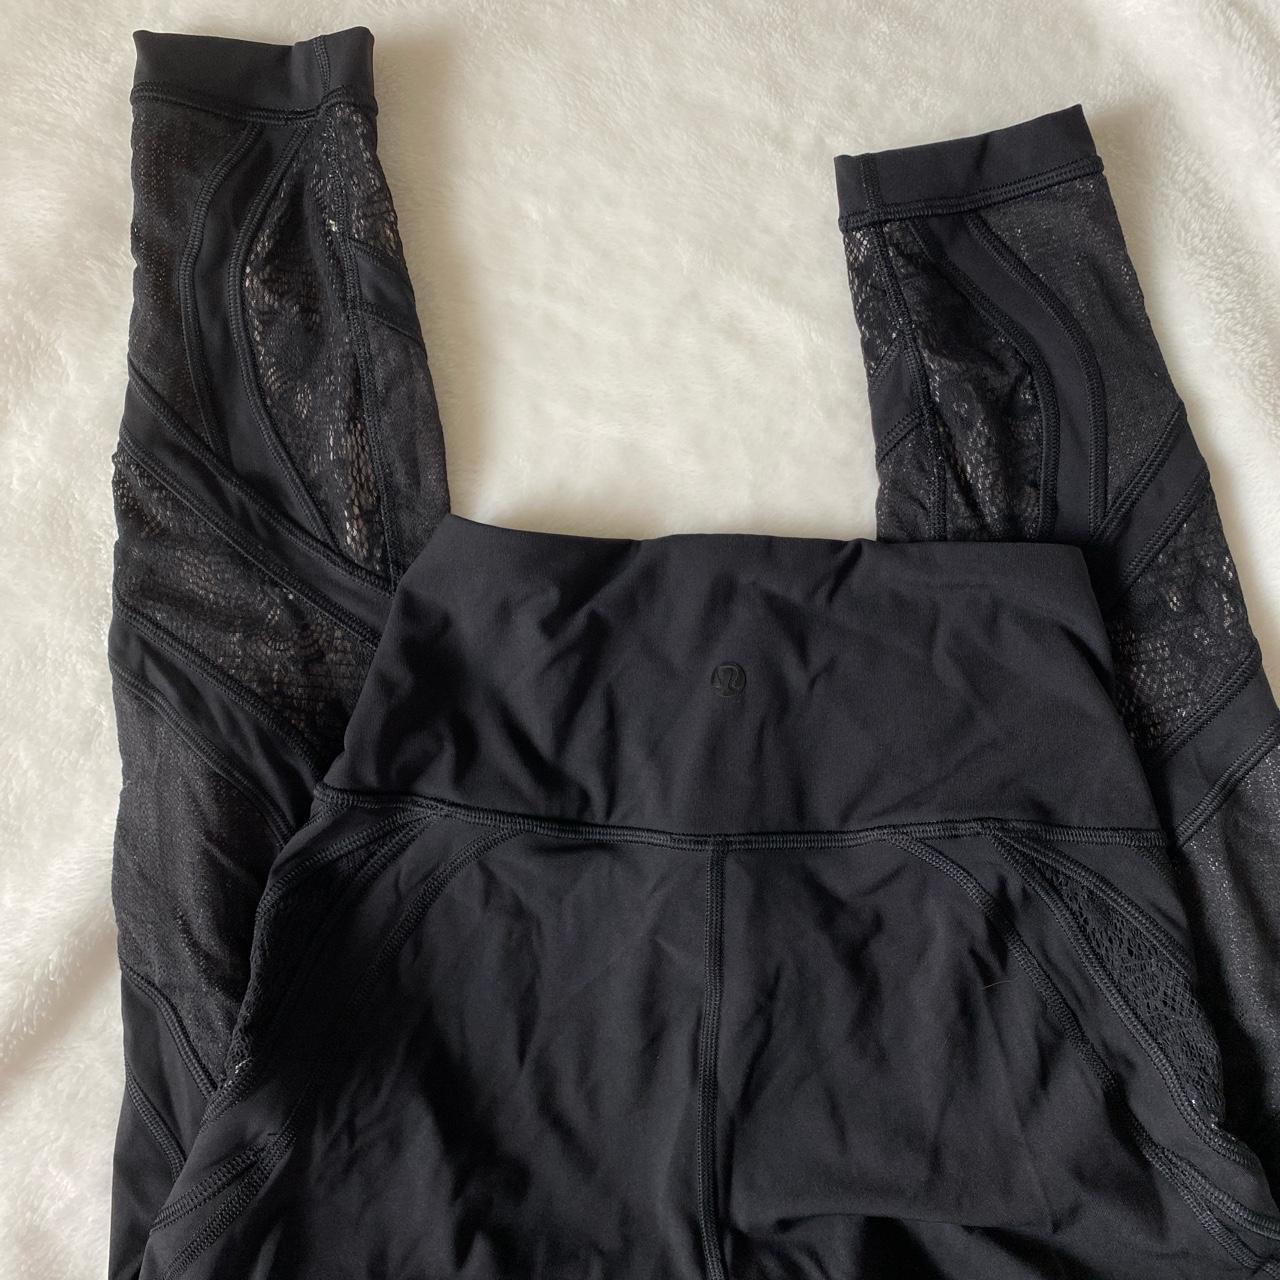 Lululemon lace leggings • size 4 • retails for $128 - Depop